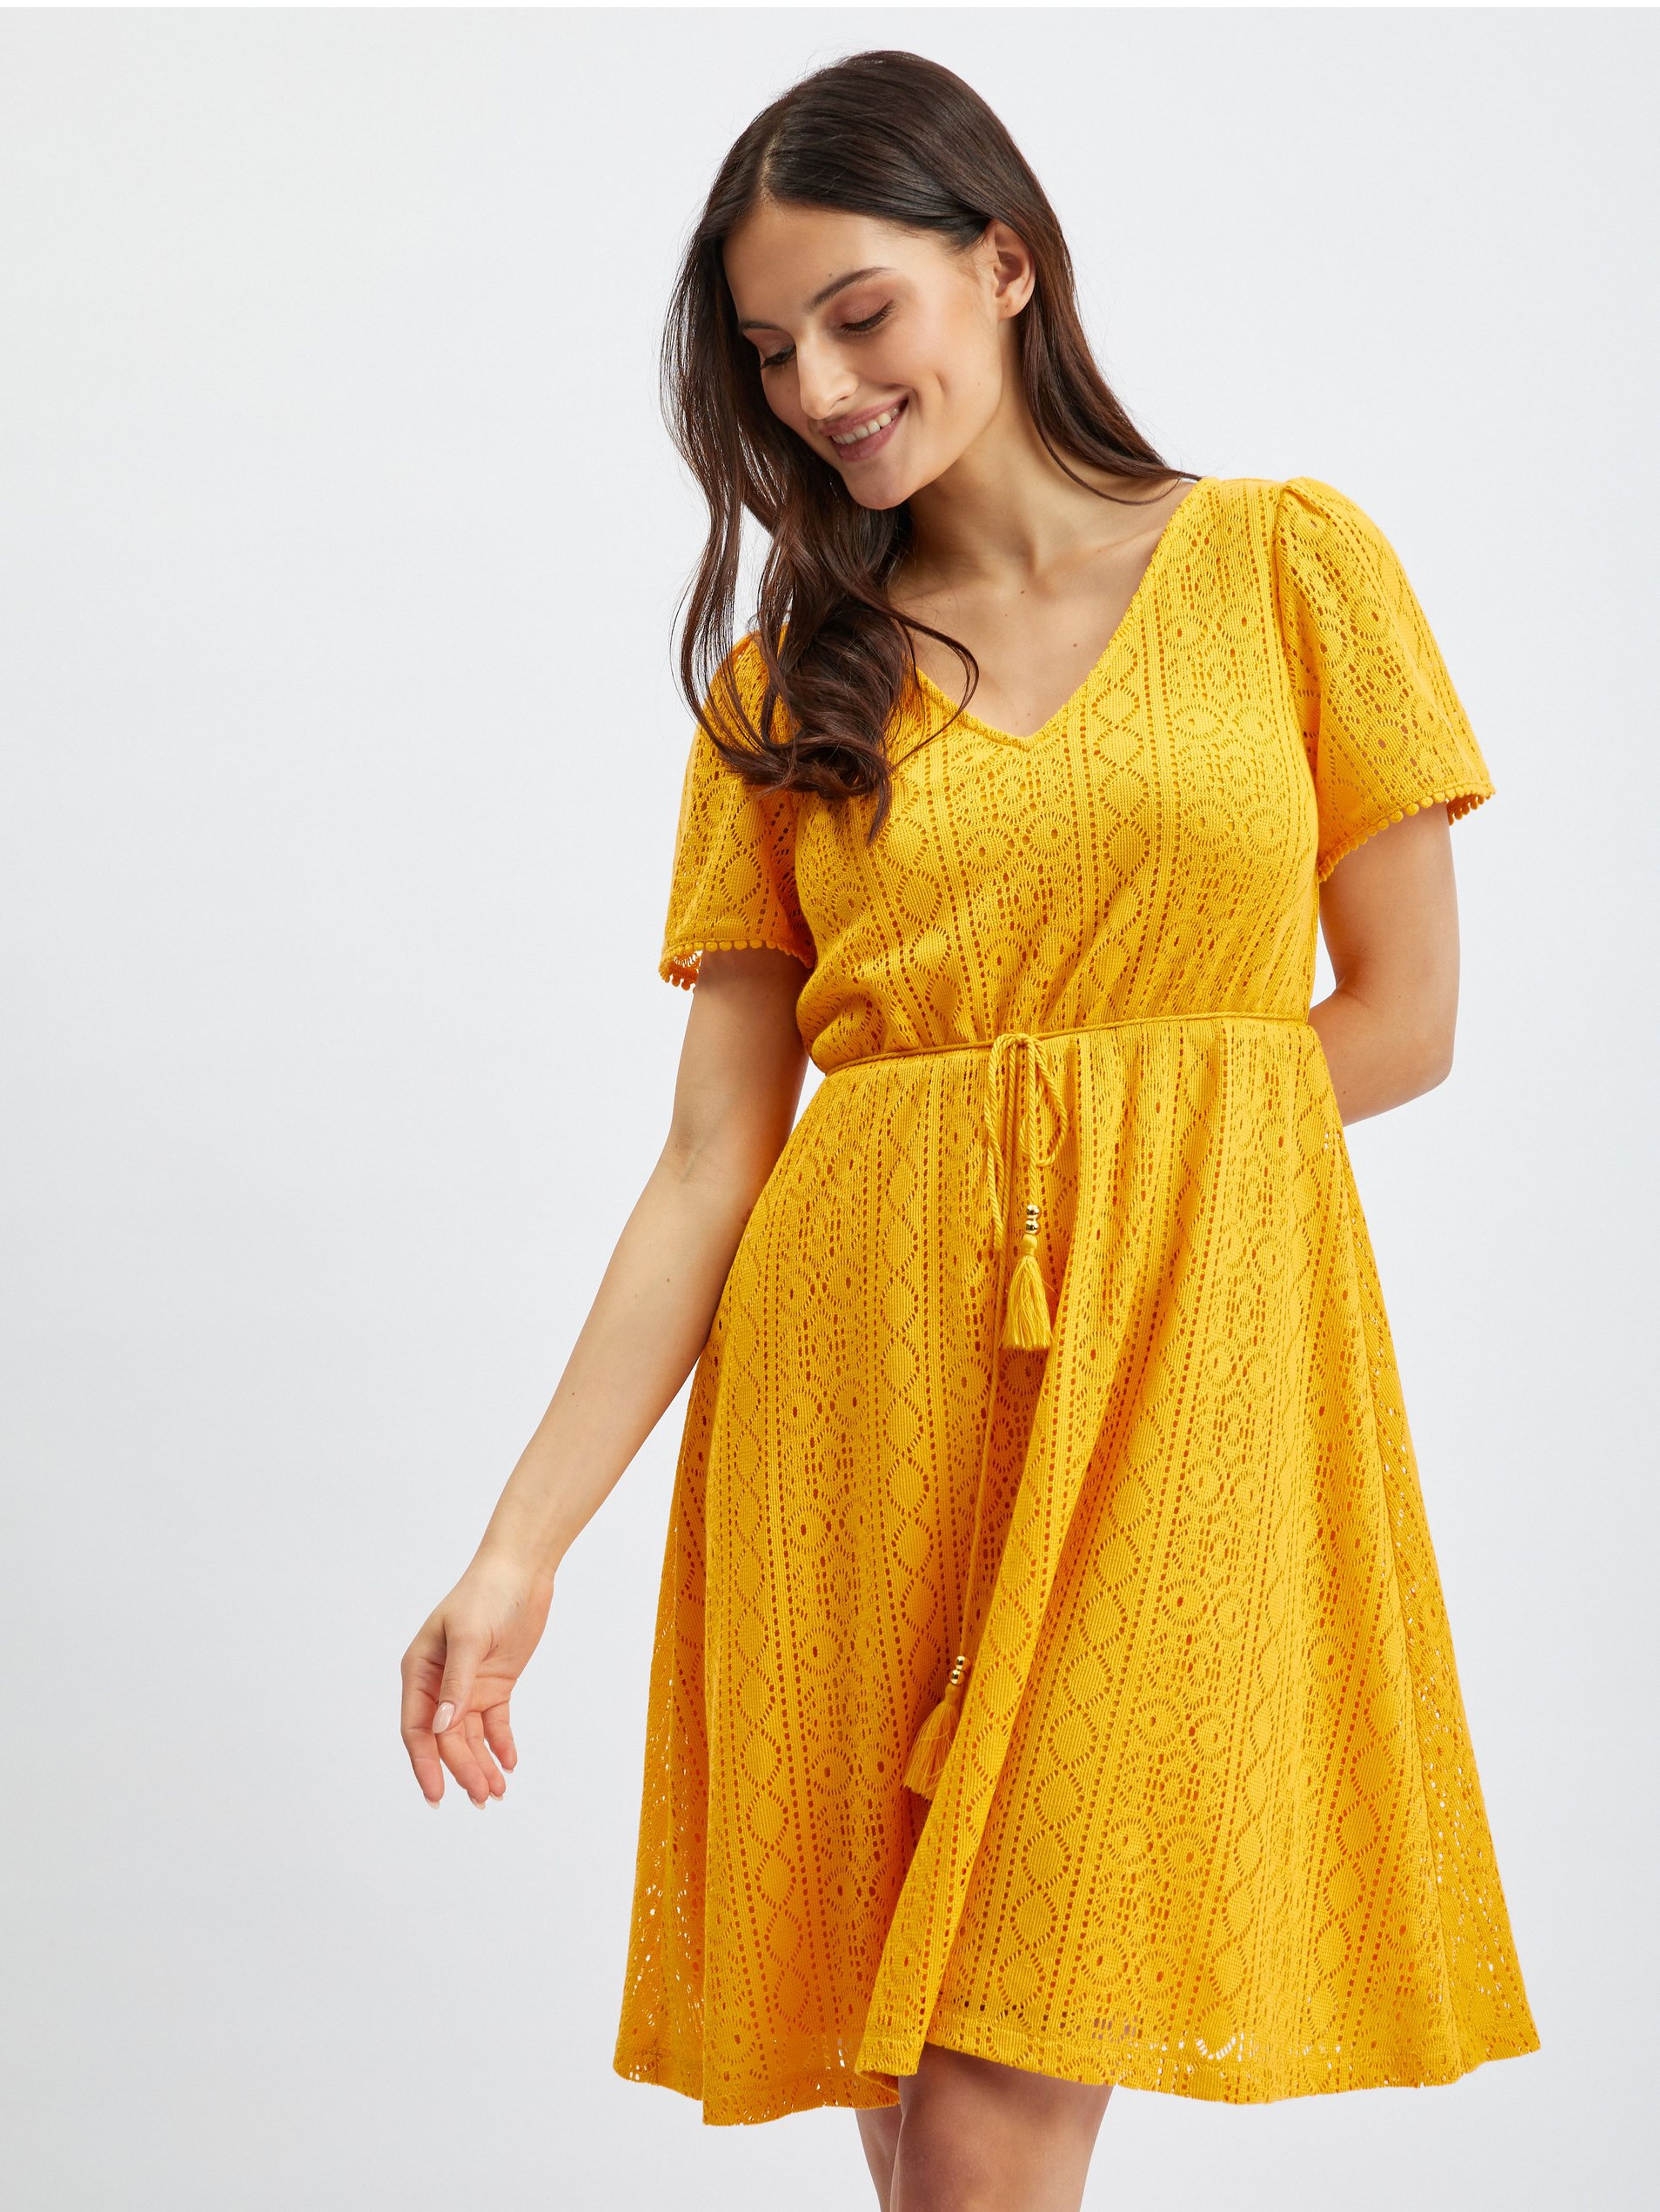 Żółta wzorzysta sukienka damska ORSAY